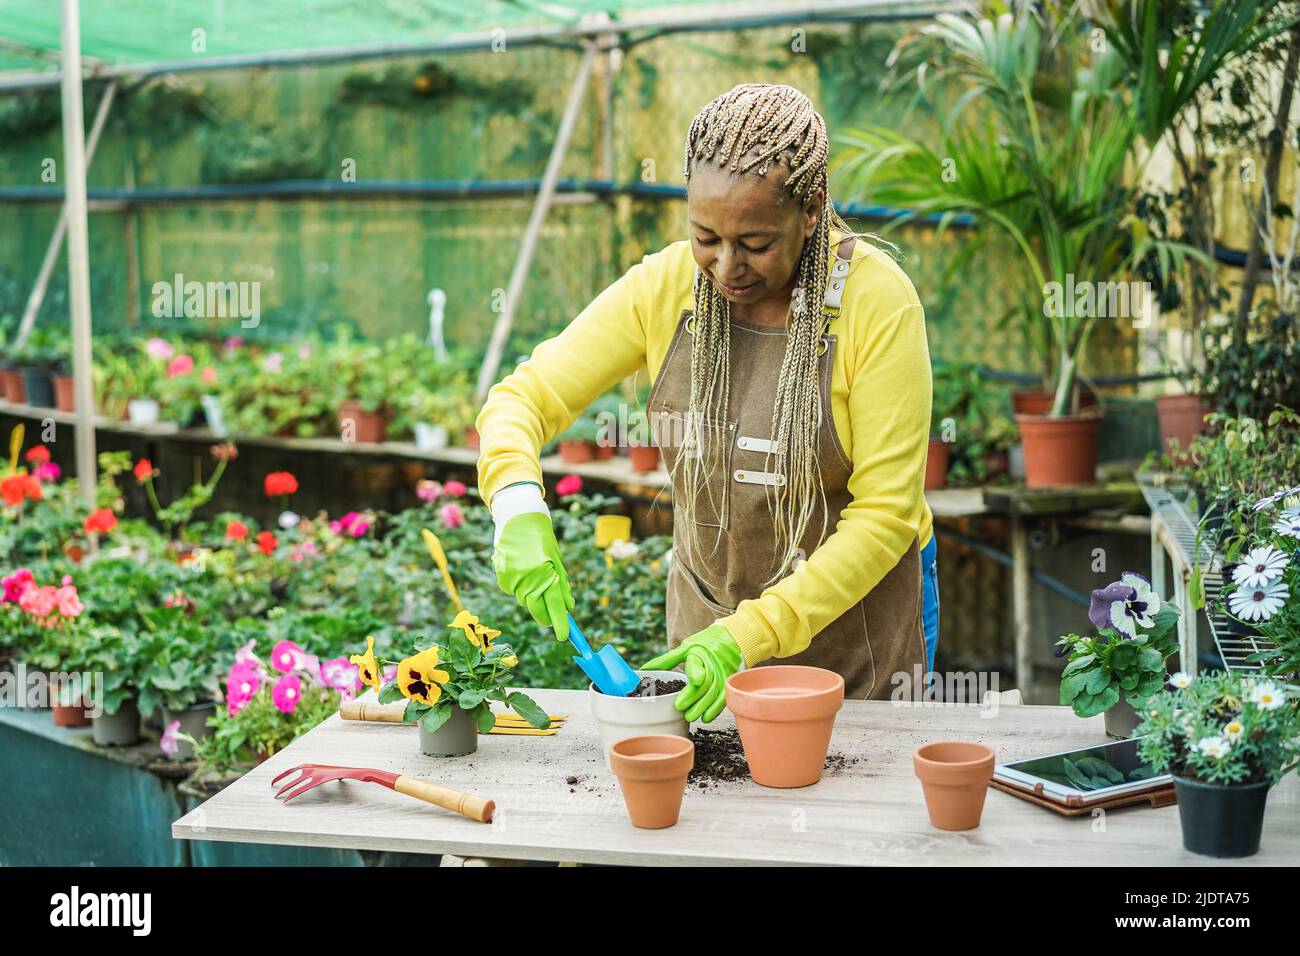 African woman preparing flowers plants inside nursery garden - Focus on hands Stock Photo